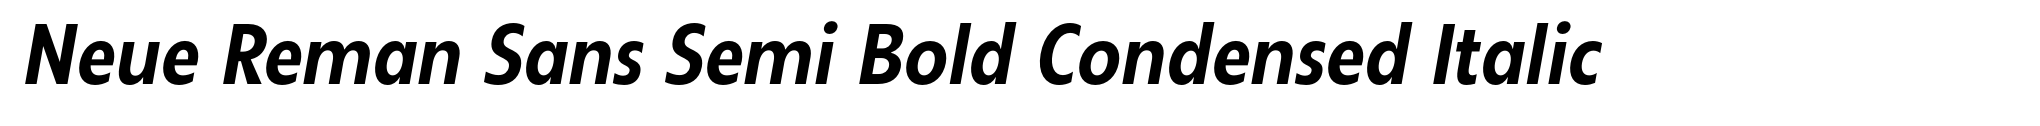 Neue Reman Sans Semi Bold Condensed Italic image